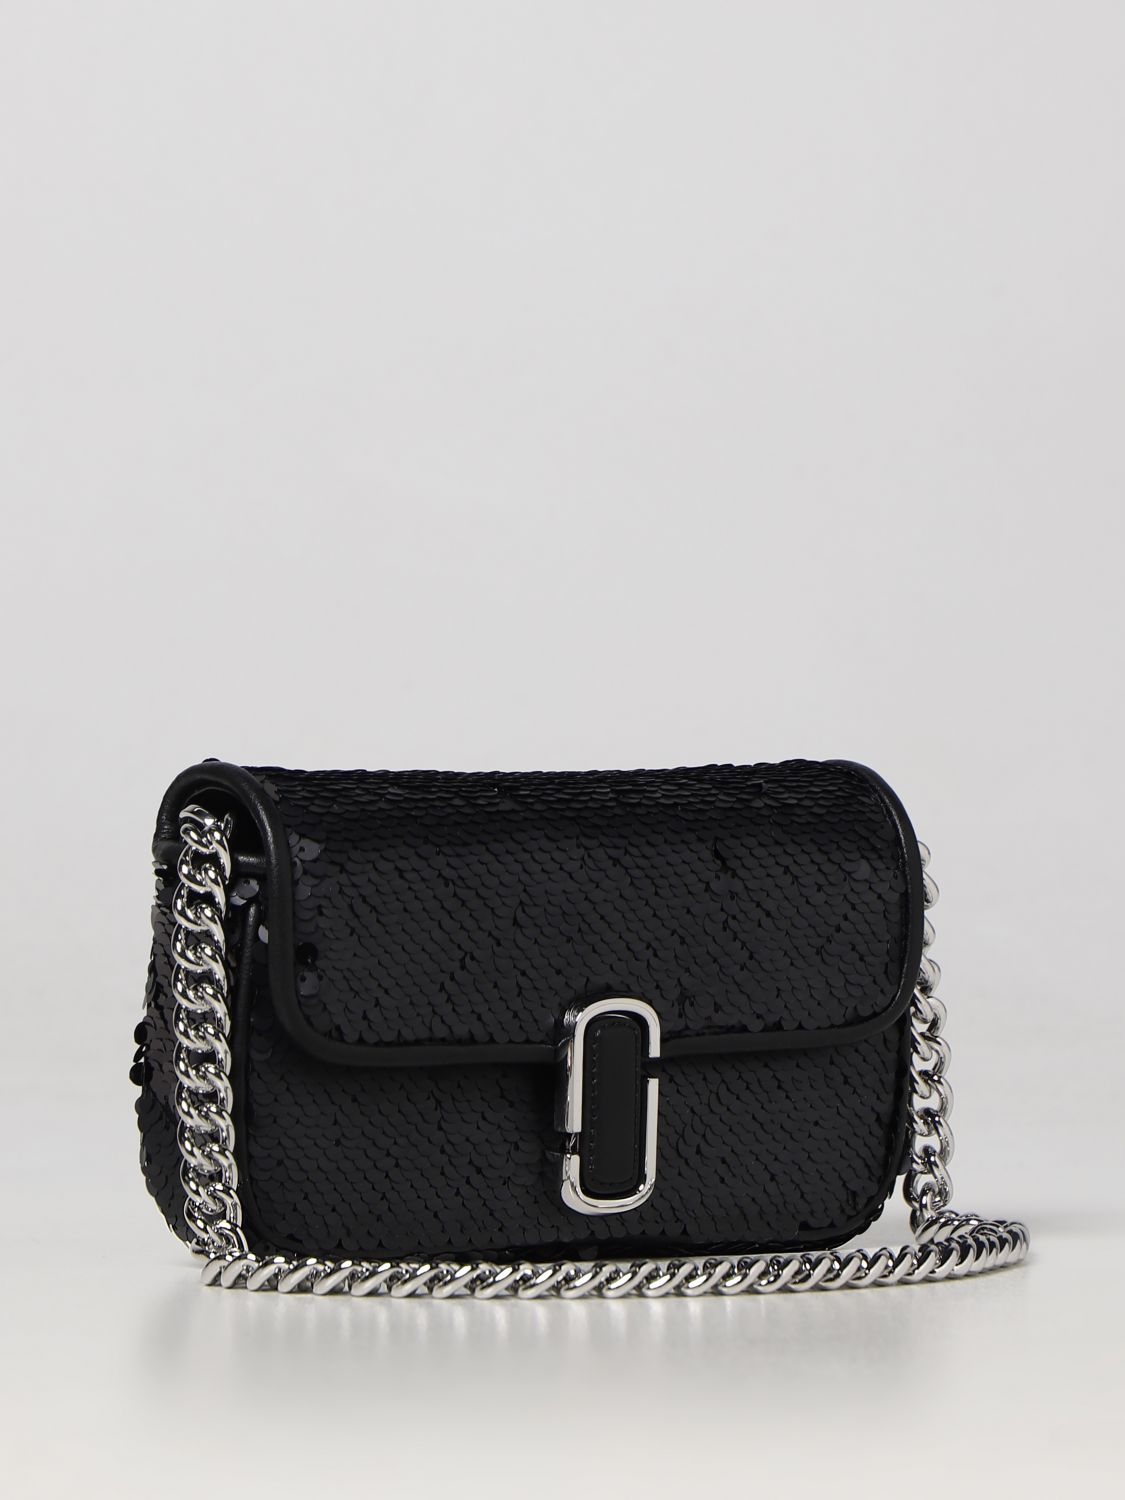 Marc Jacobs Snapshot Bags UK Online Store - Black Snapshot Dtm Womens